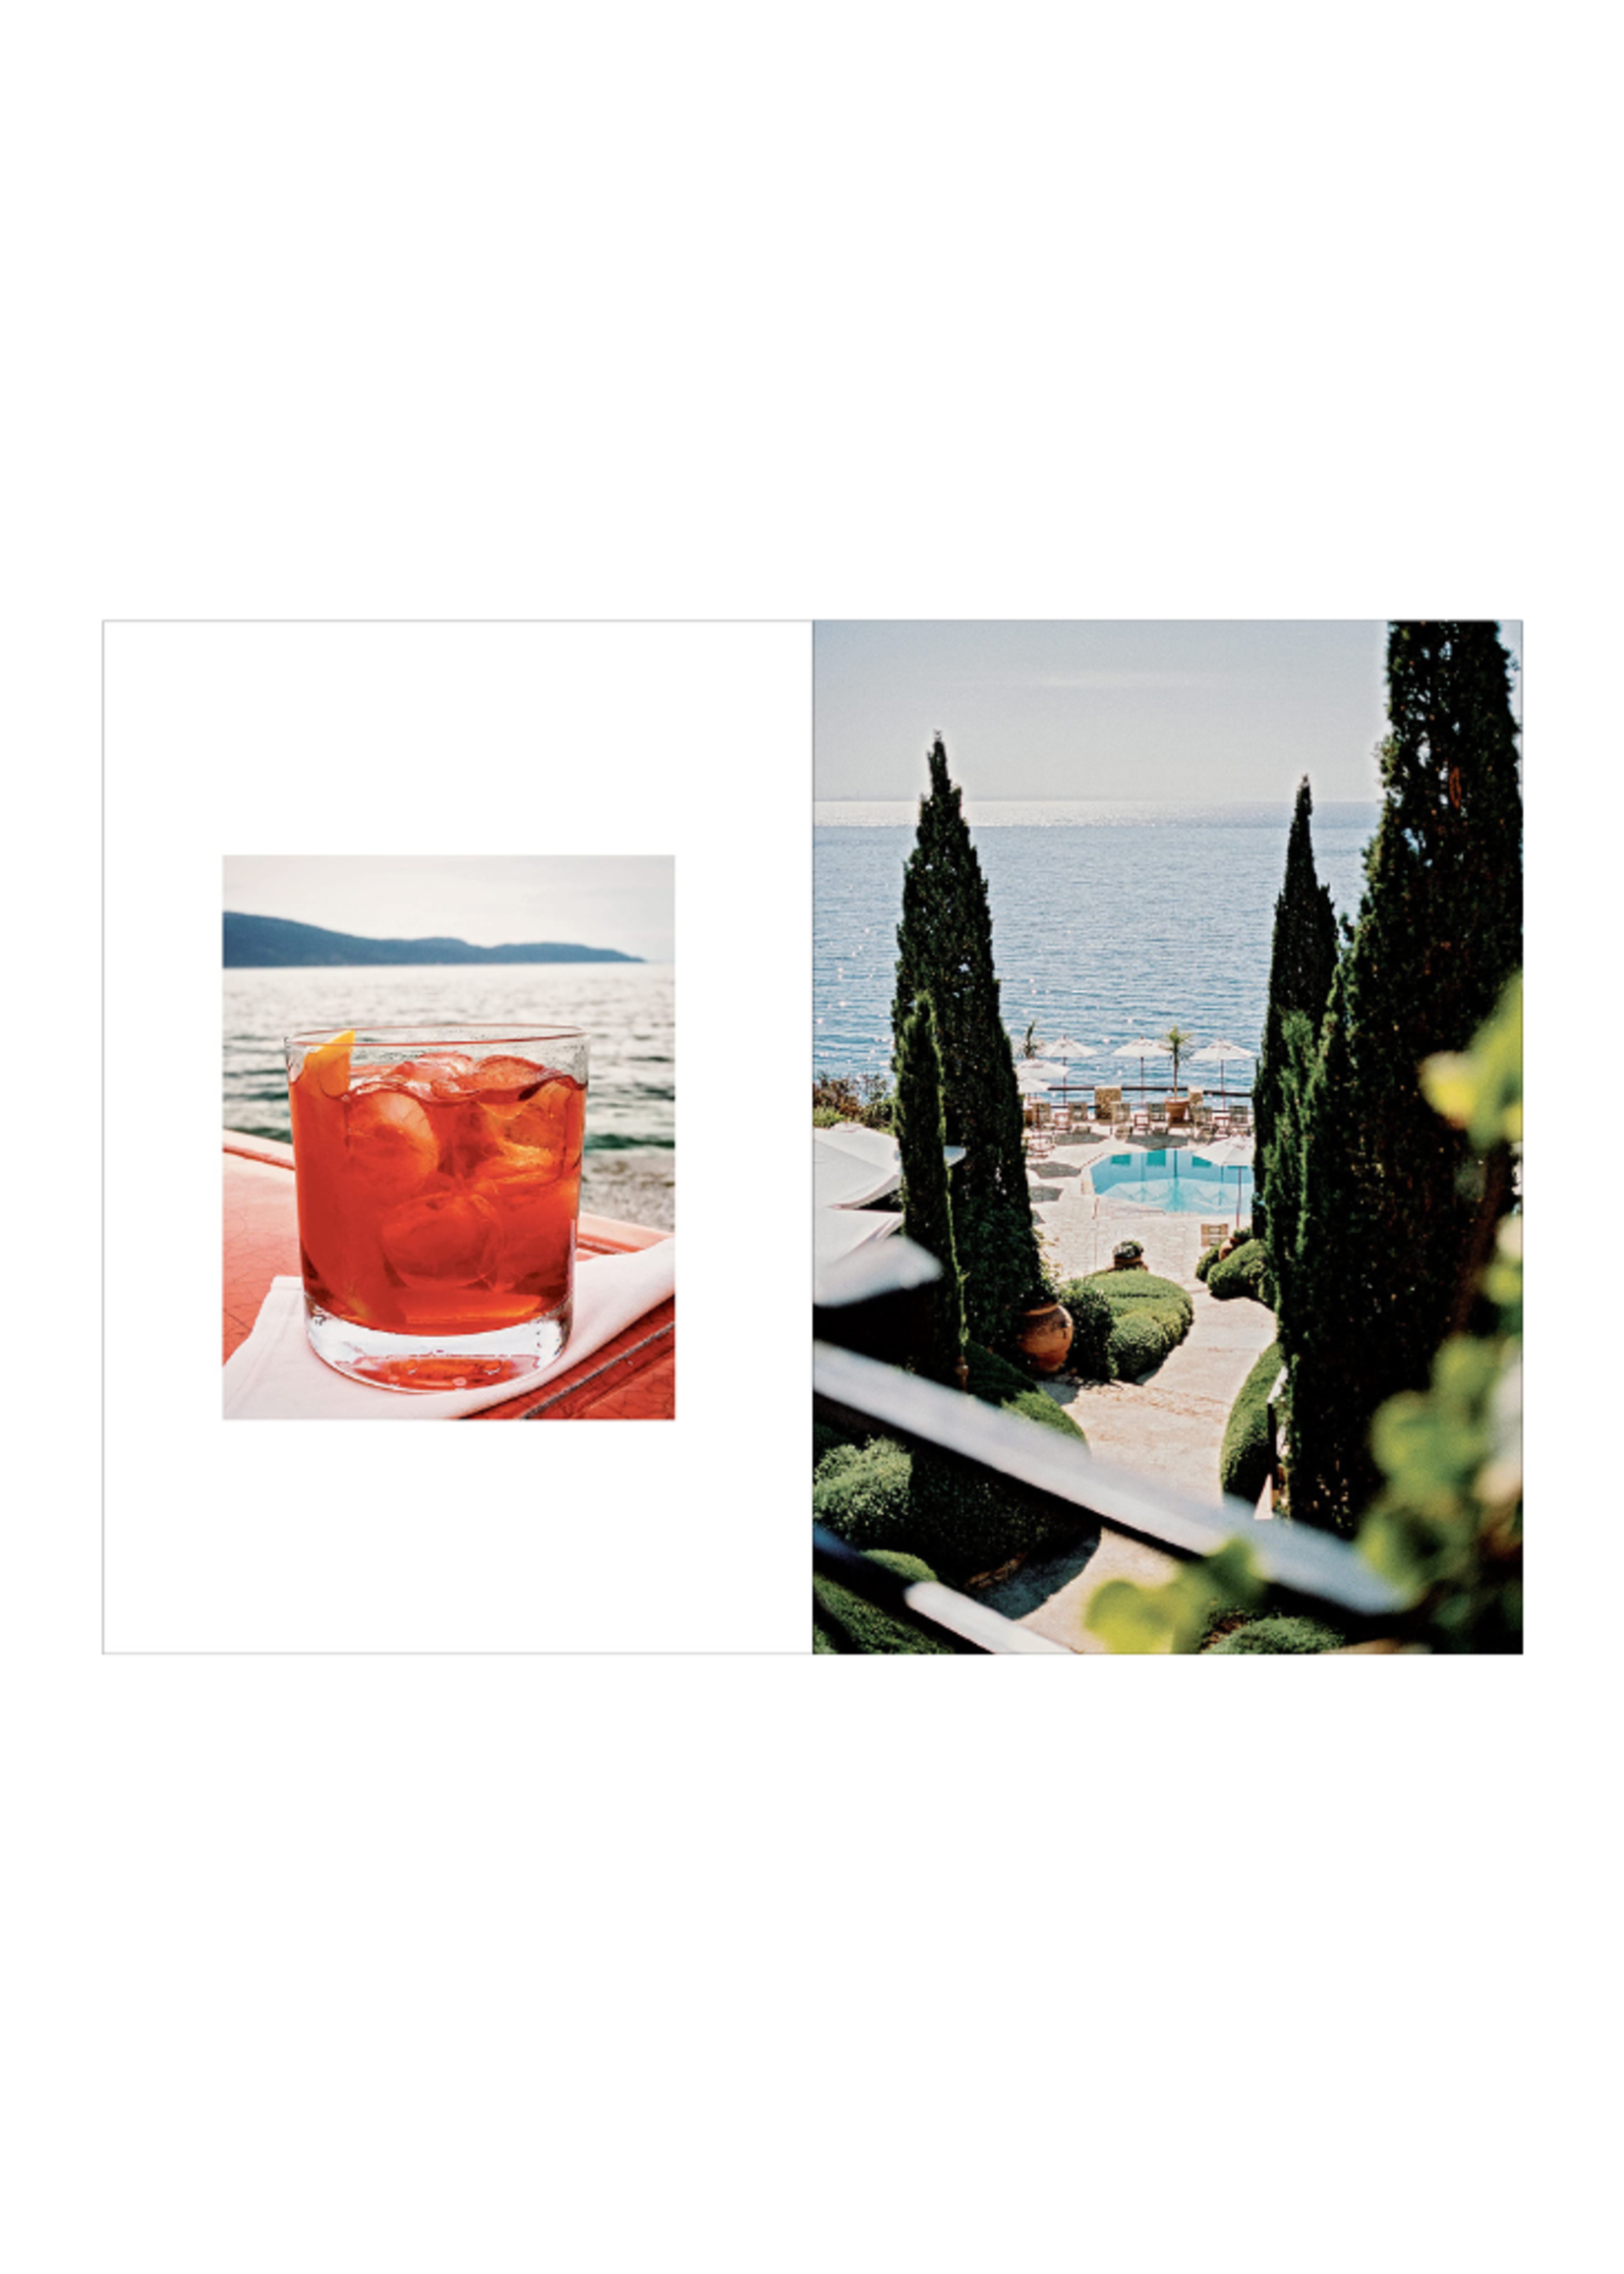 Hachette The Negroni: A Love Affair With A Classic Cocktail by Matt Hranek